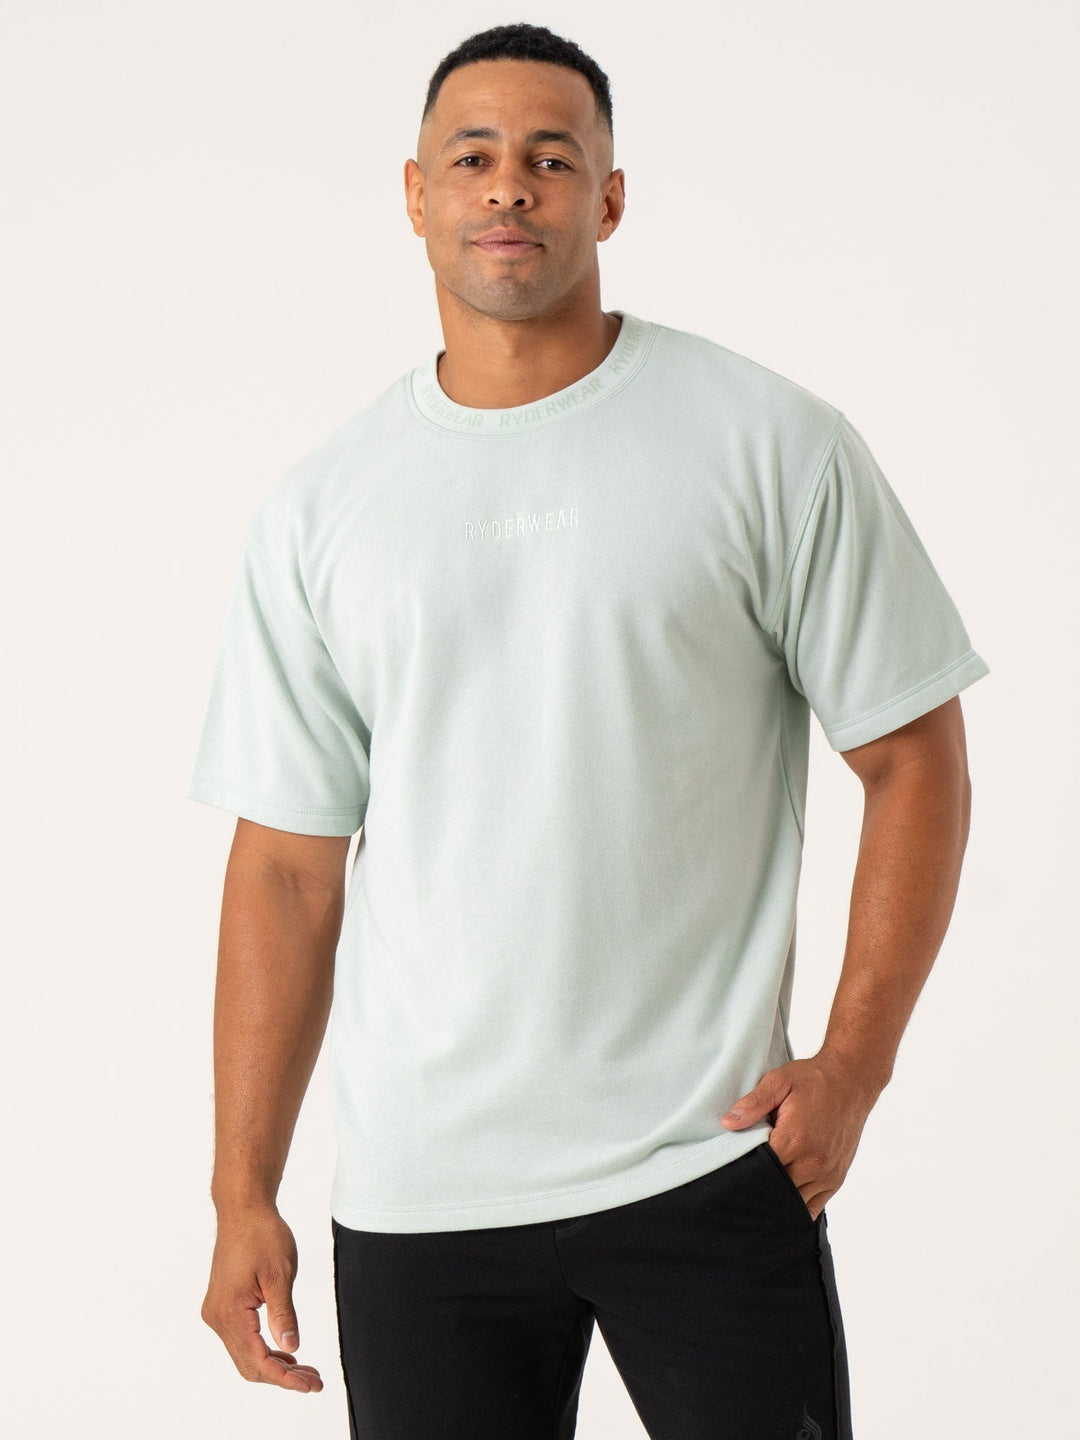 Pursuit Fleece T-Shirt - Spearmint Clothing Ryderwear 